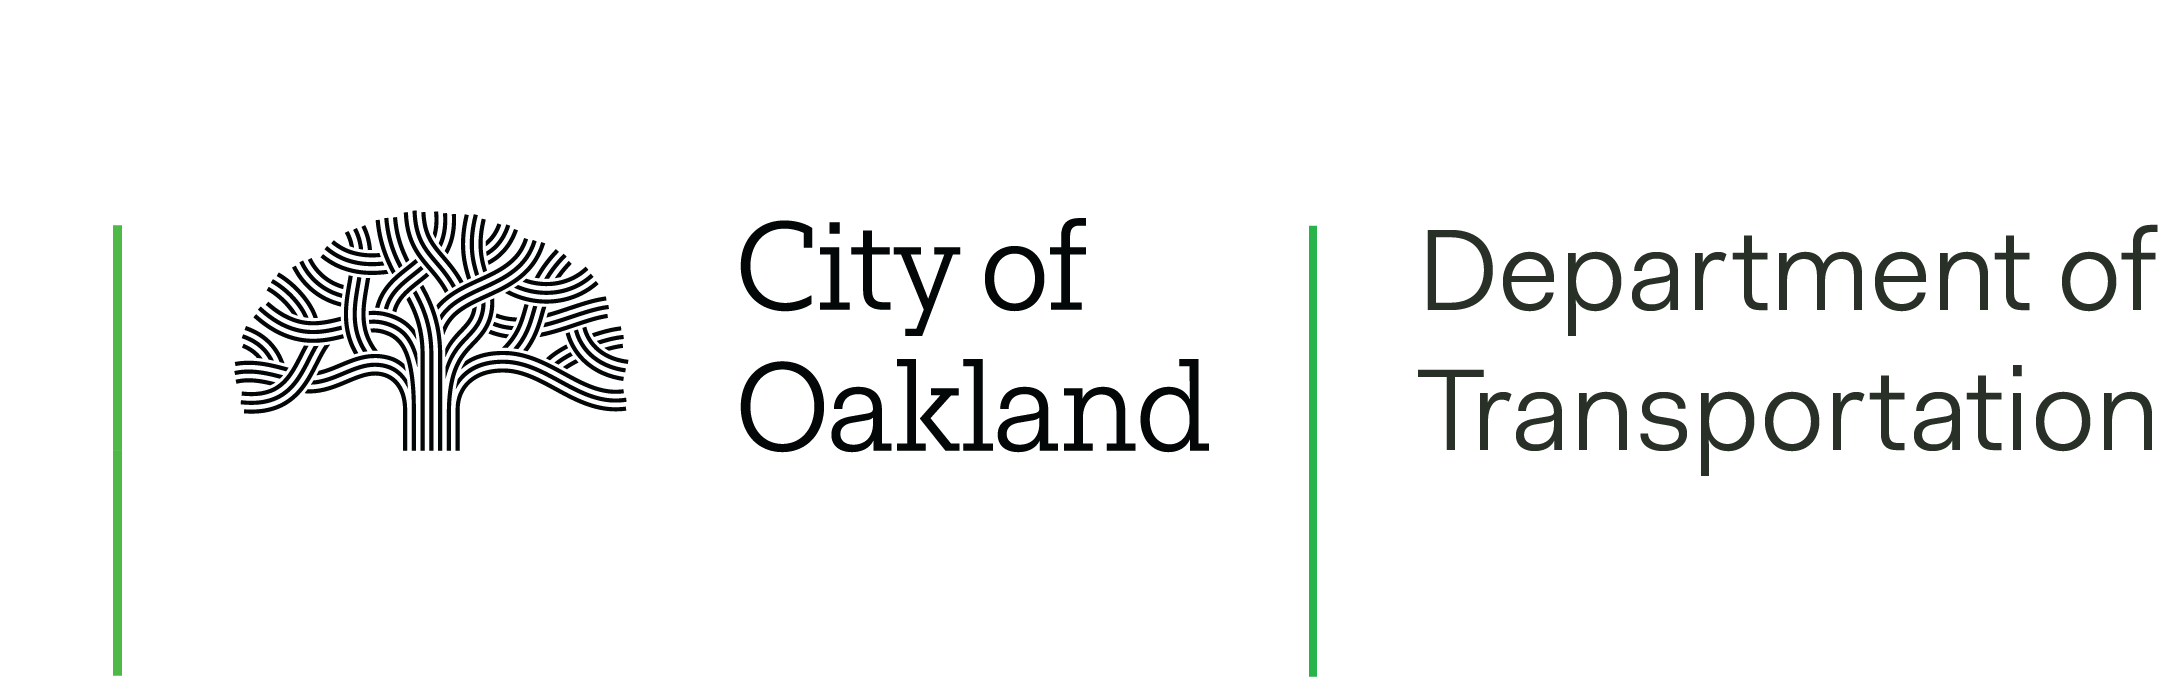 City of Oakland Department of Transportation logo